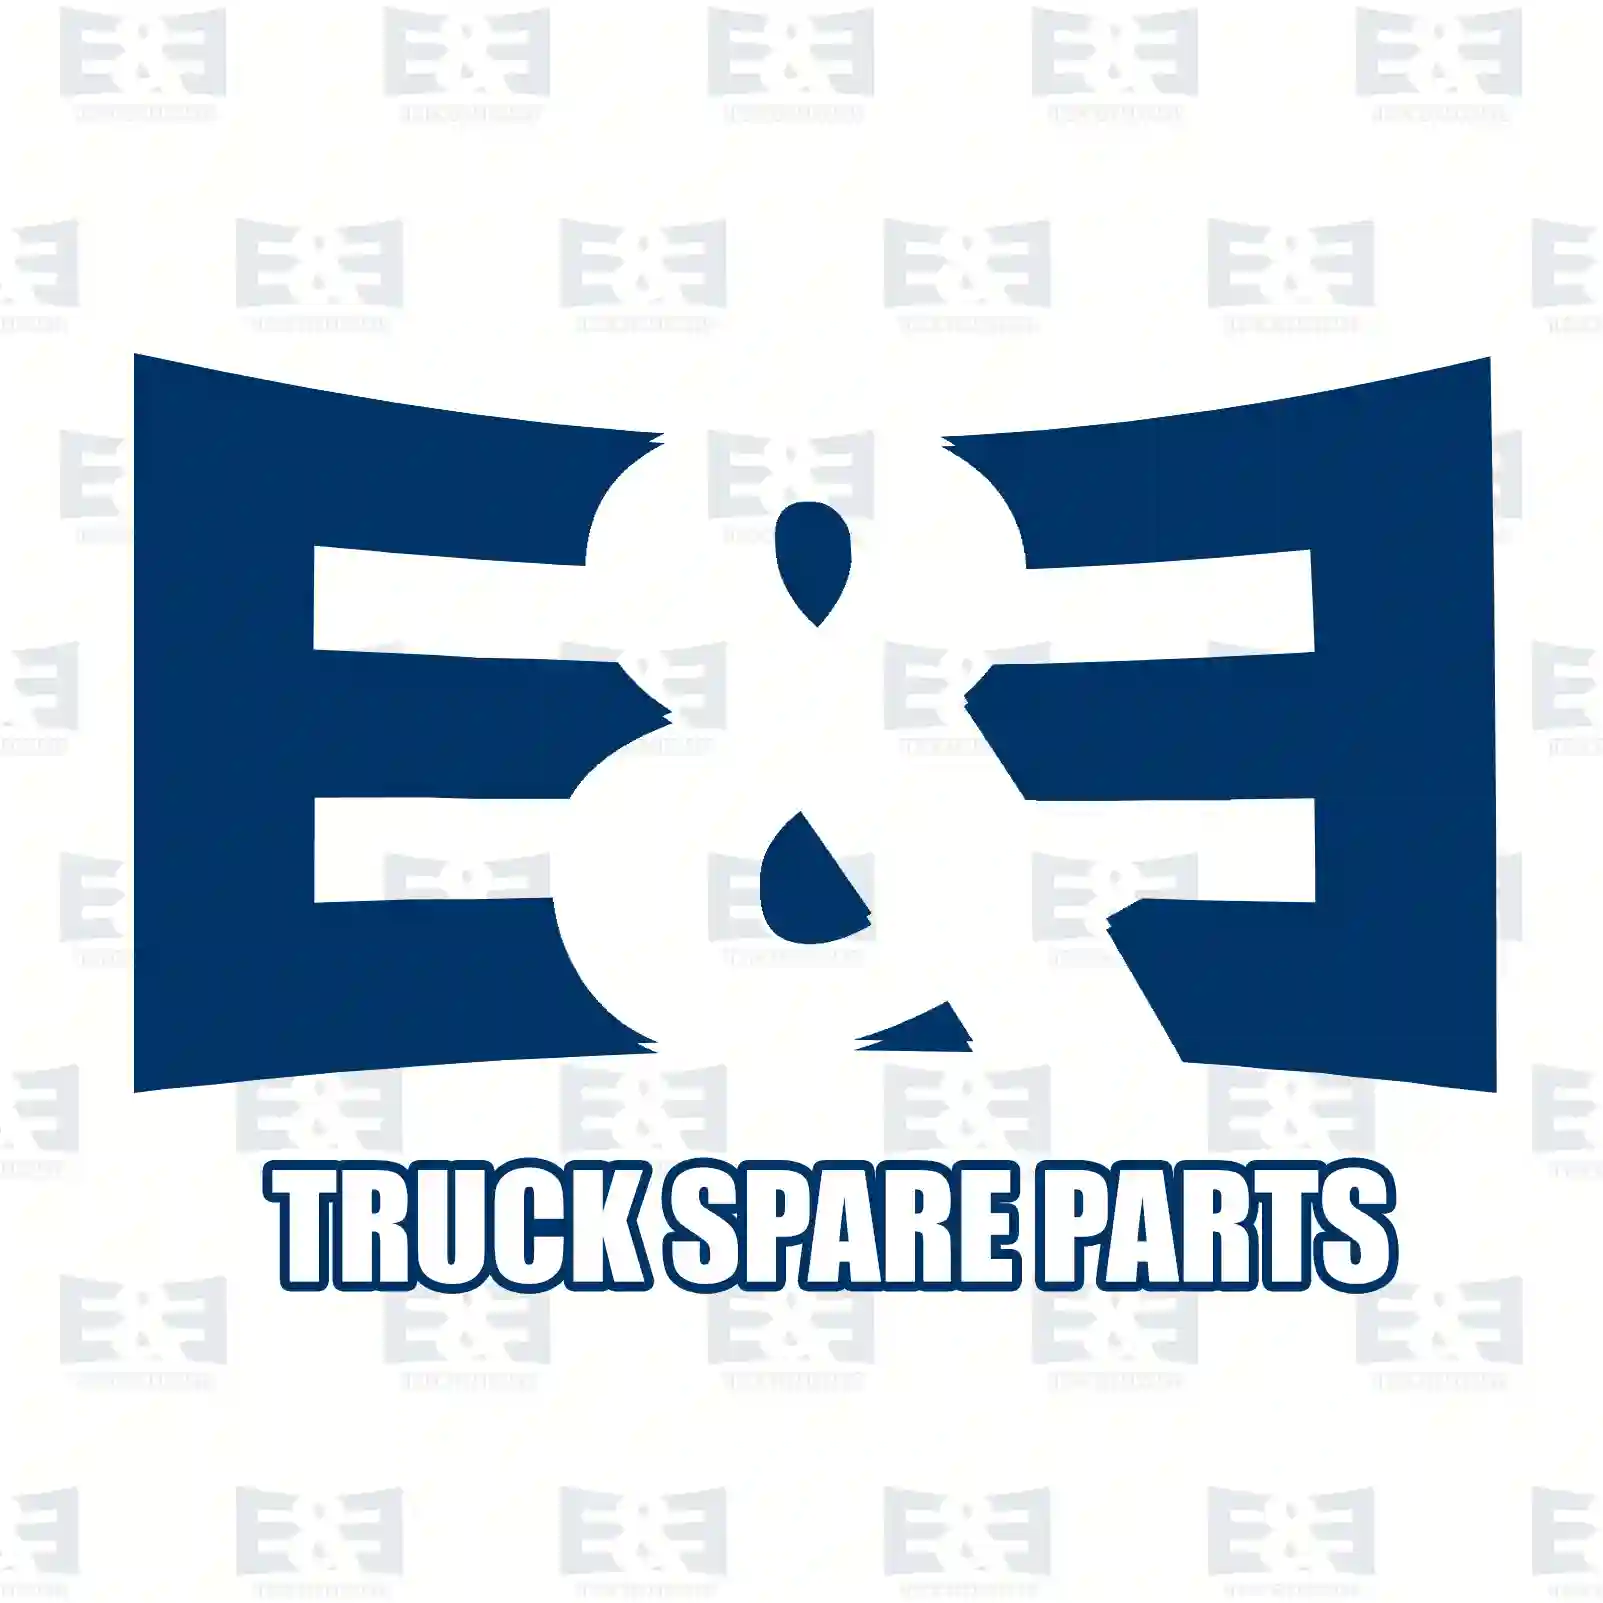 Step well case, left, 2E2289020, 21344647, 21392183, ZG61182-0008 ||  2E2289020 E&E Truck Spare Parts | Truck Spare Parts, Auotomotive Spare Parts Step well case, left, 2E2289020, 21344647, 21392183, ZG61182-0008 ||  2E2289020 E&E Truck Spare Parts | Truck Spare Parts, Auotomotive Spare Parts